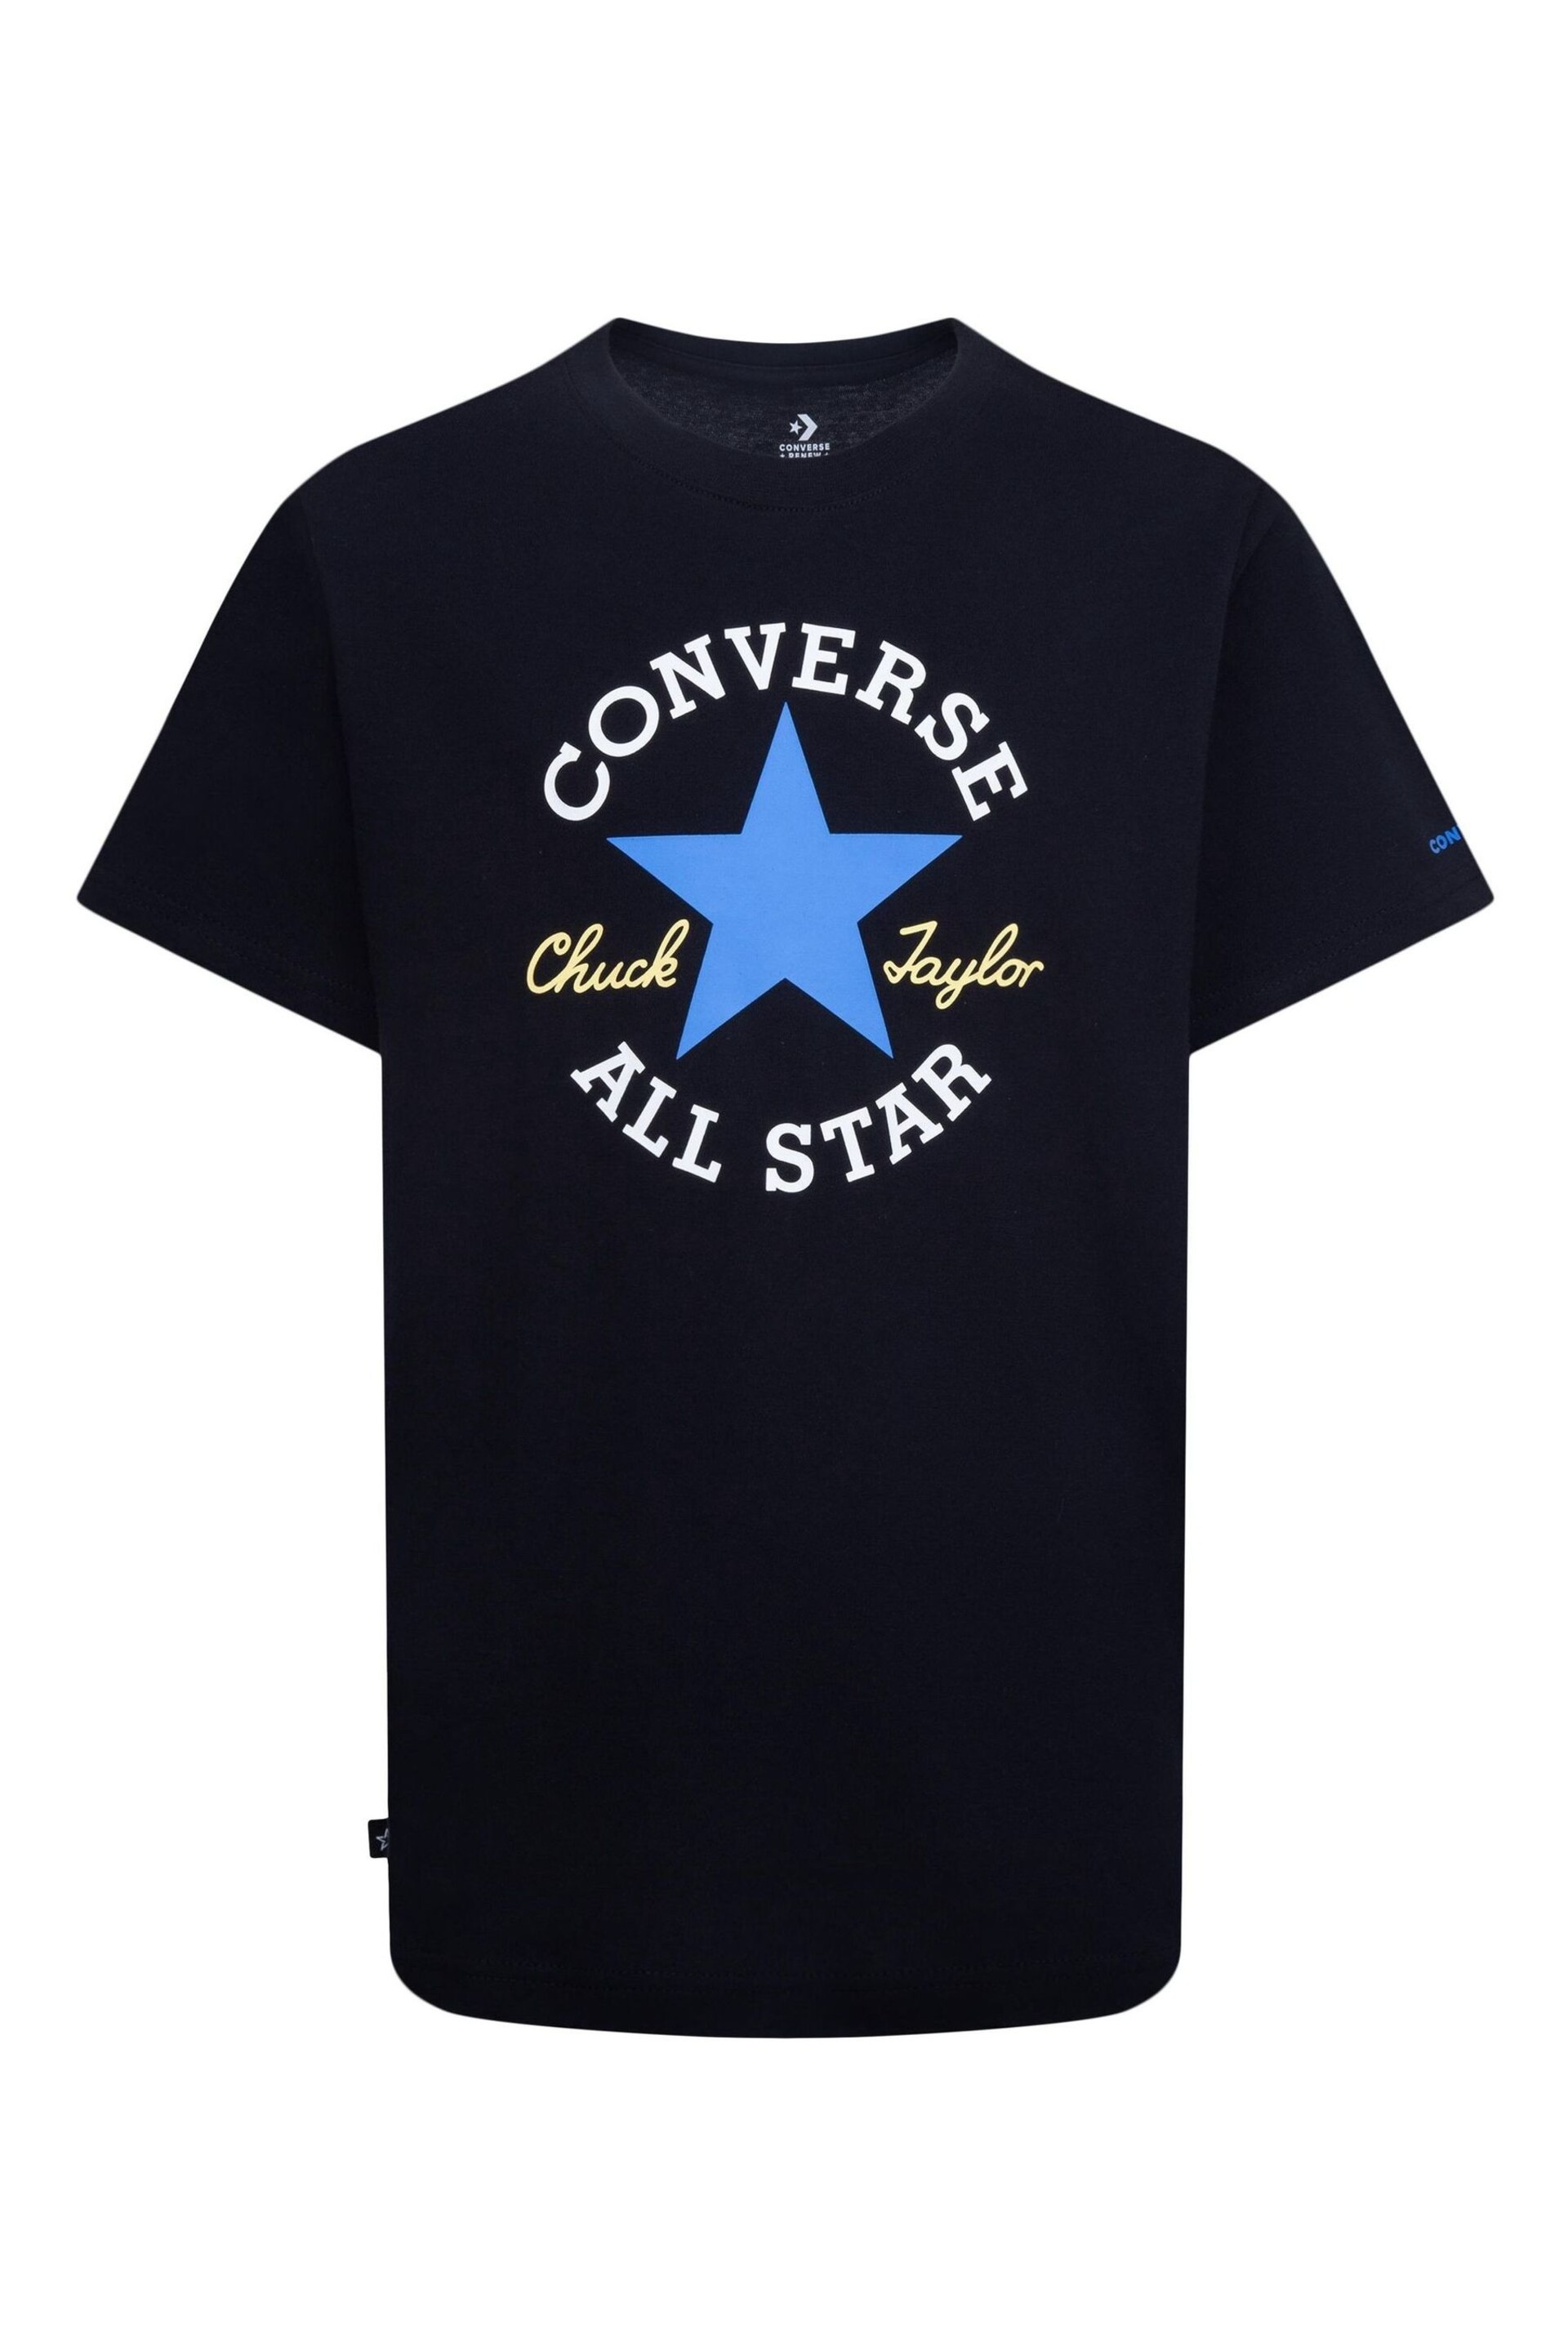 Converse Black C Bla Sust Core Ss T-Shirt - Image 1 of 5